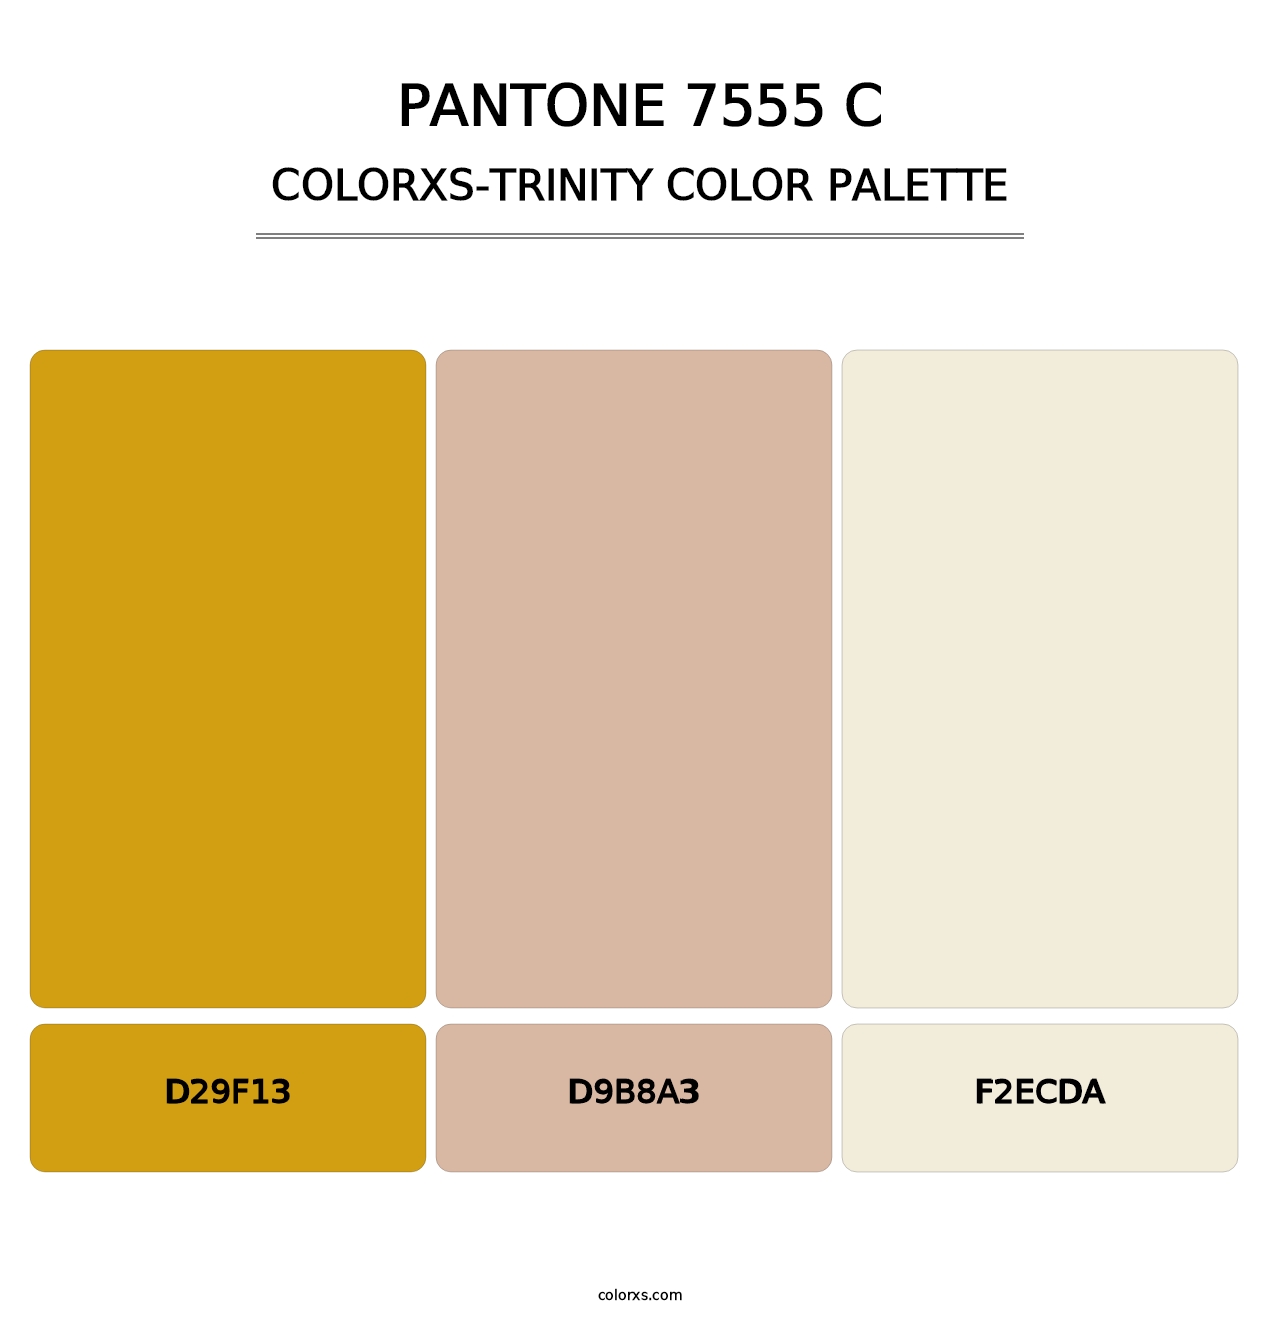 PANTONE 7555 C - Colorxs Trinity Palette